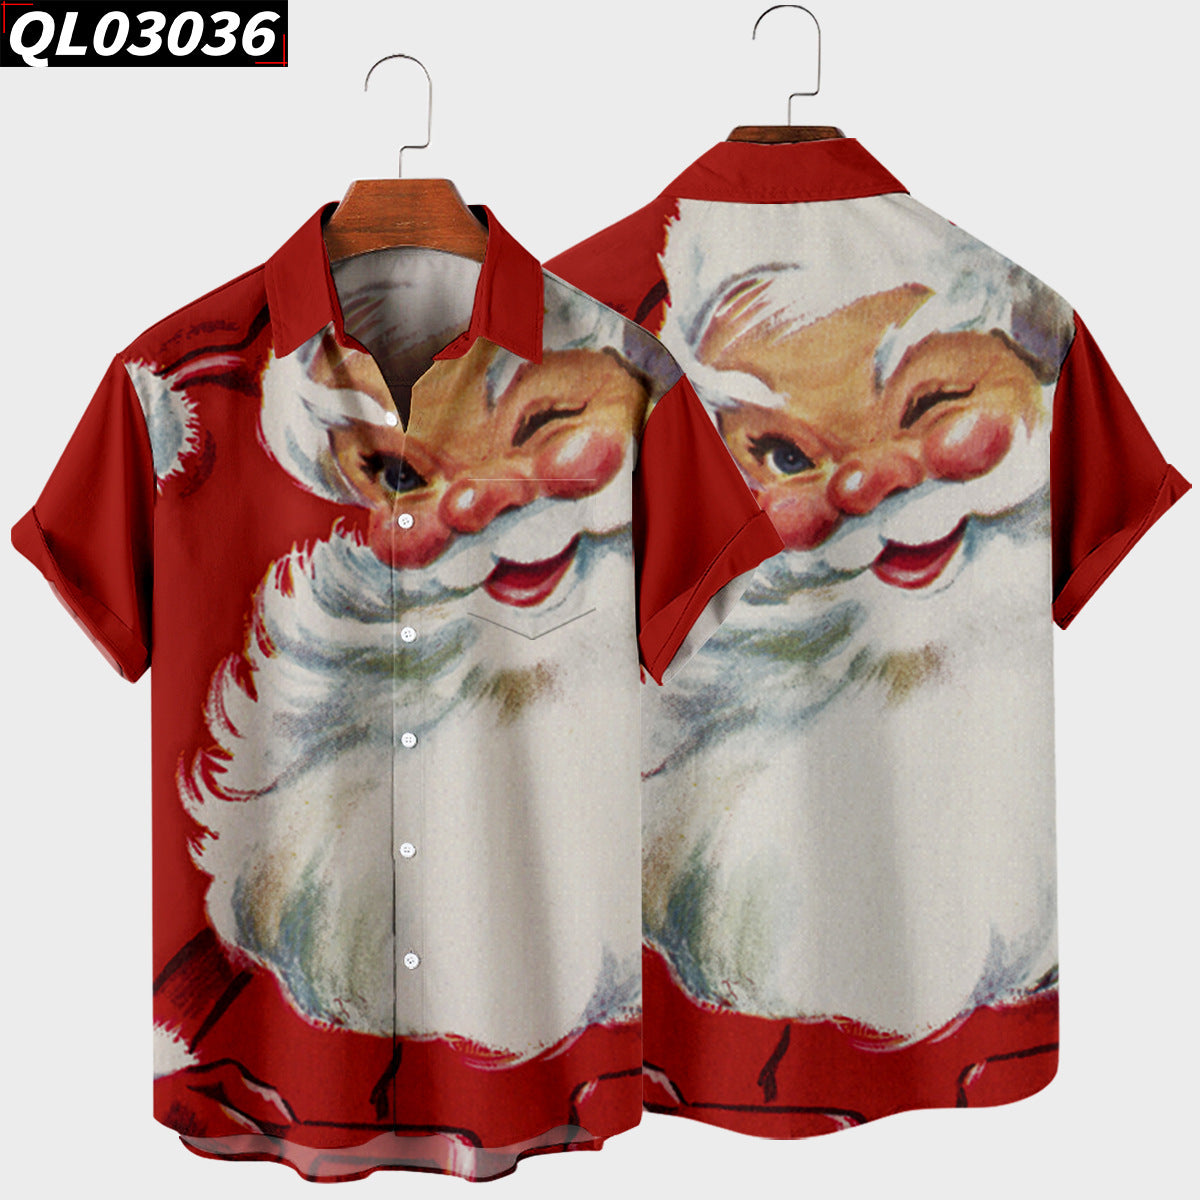 Beachside Santa Surprise: Men's Santa Claus Digital Print Hawaiian Shirt. Turn heads with a festive twist - a Santa Claus design digitally printed on a stylish Hawaiian shirt.